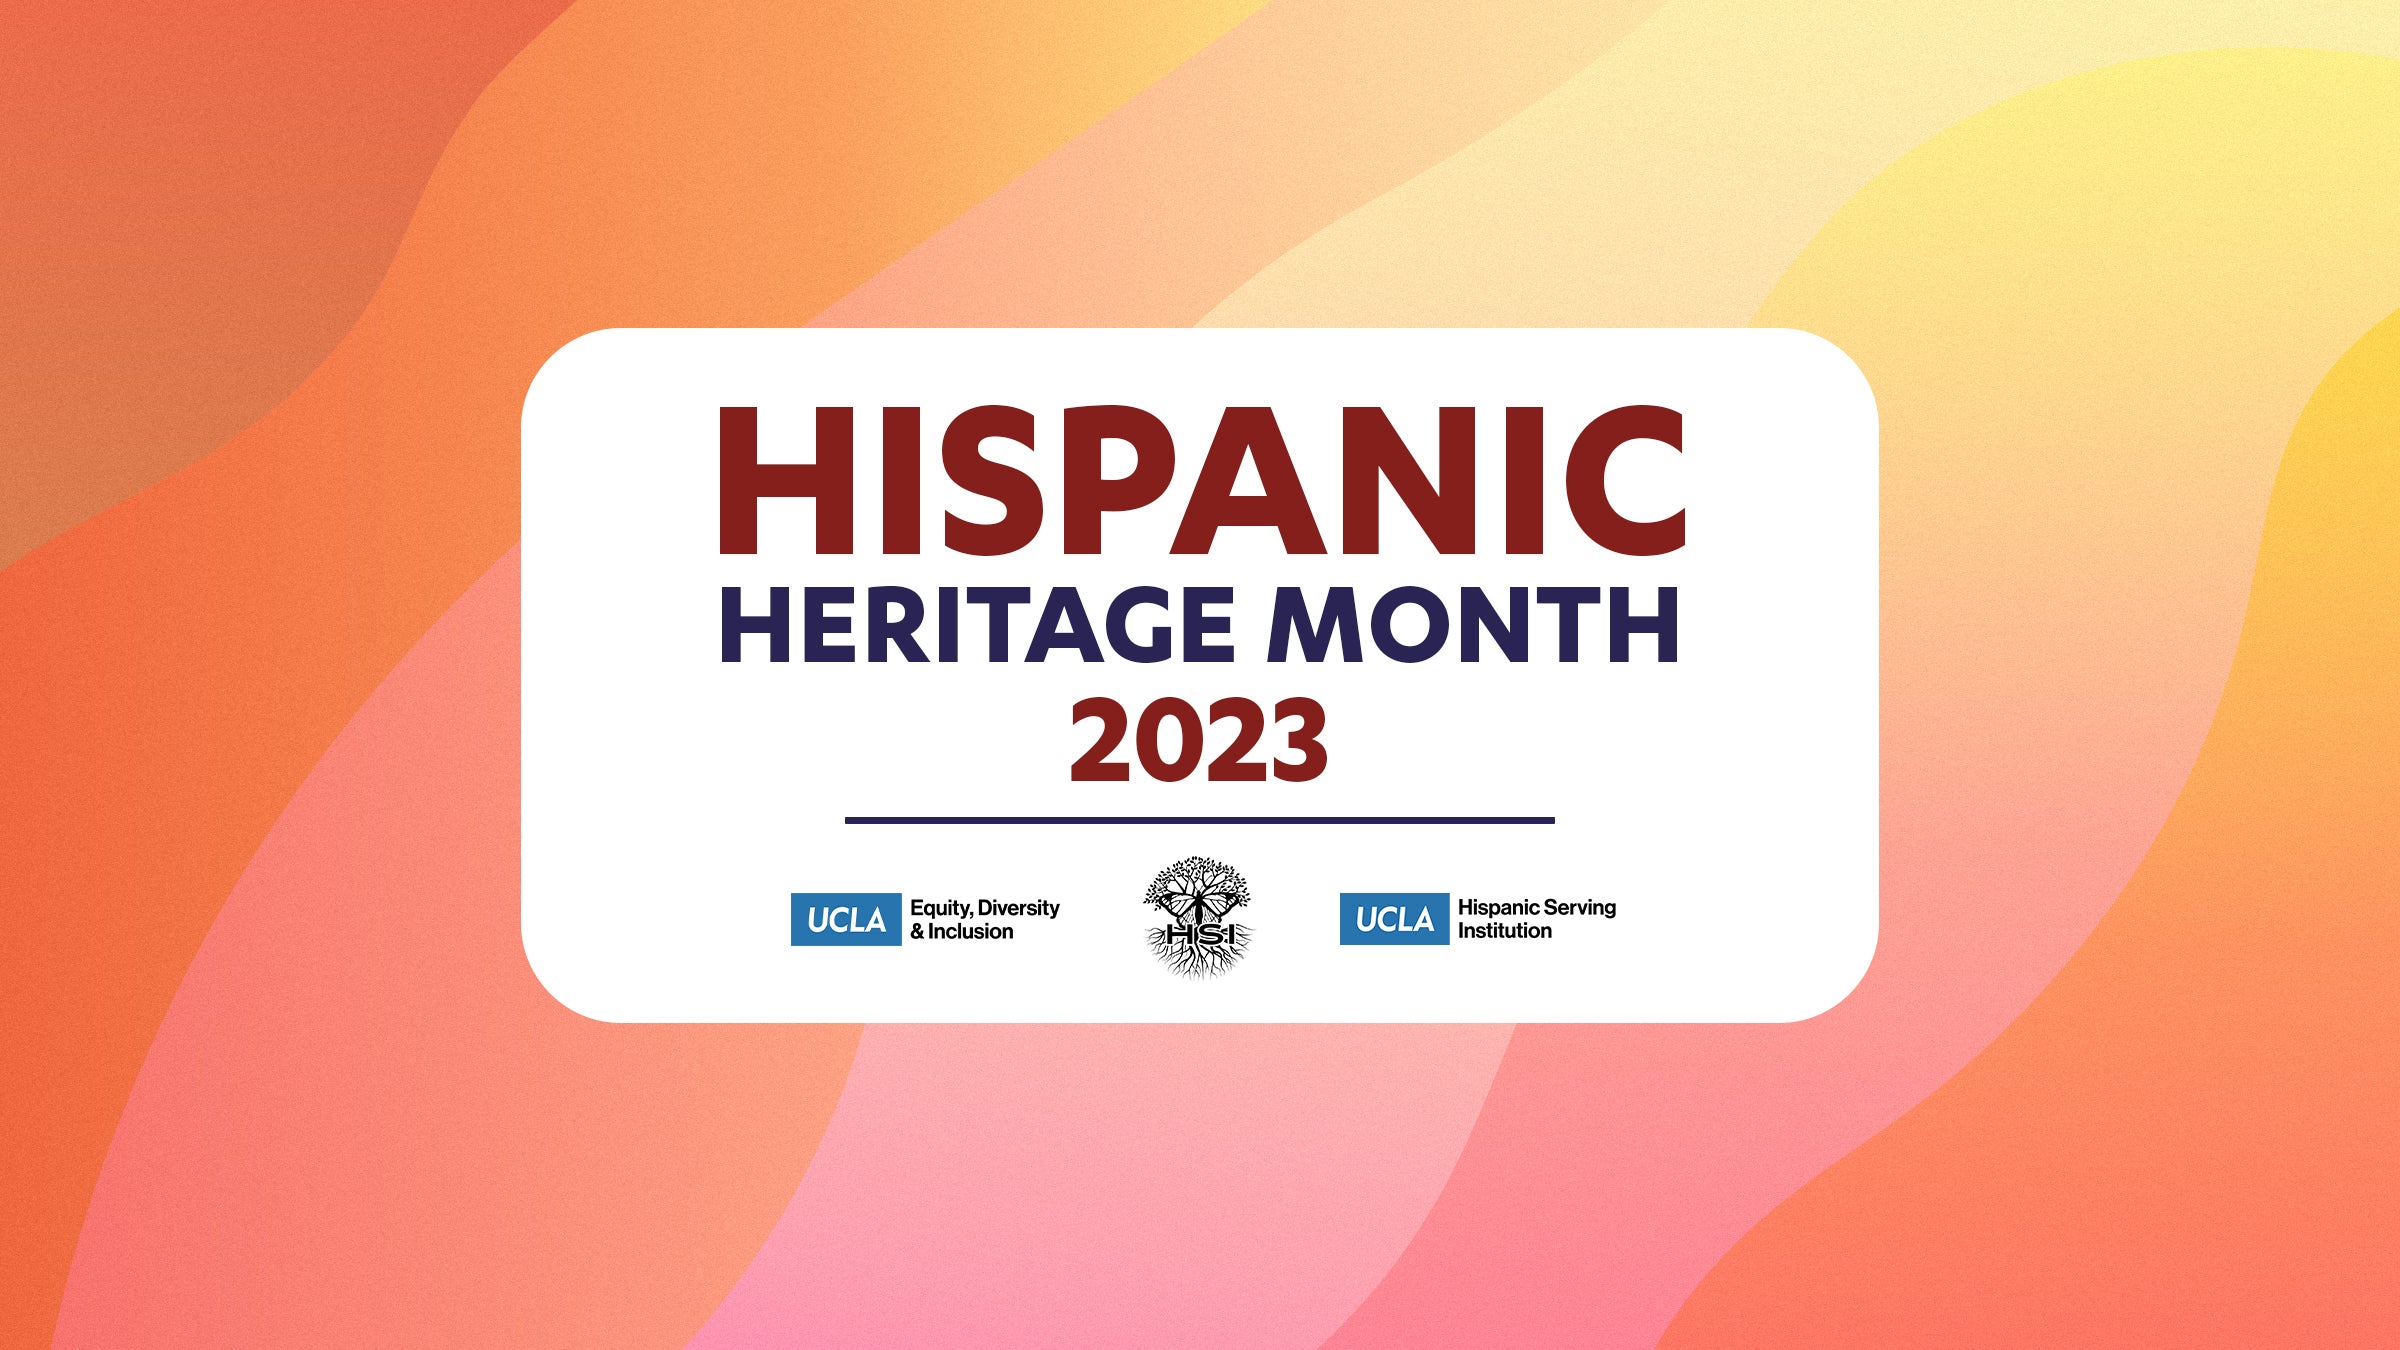 hispanic heritage month 2023 - join us in celebrating national hispanic heritage month at ucla and beyond